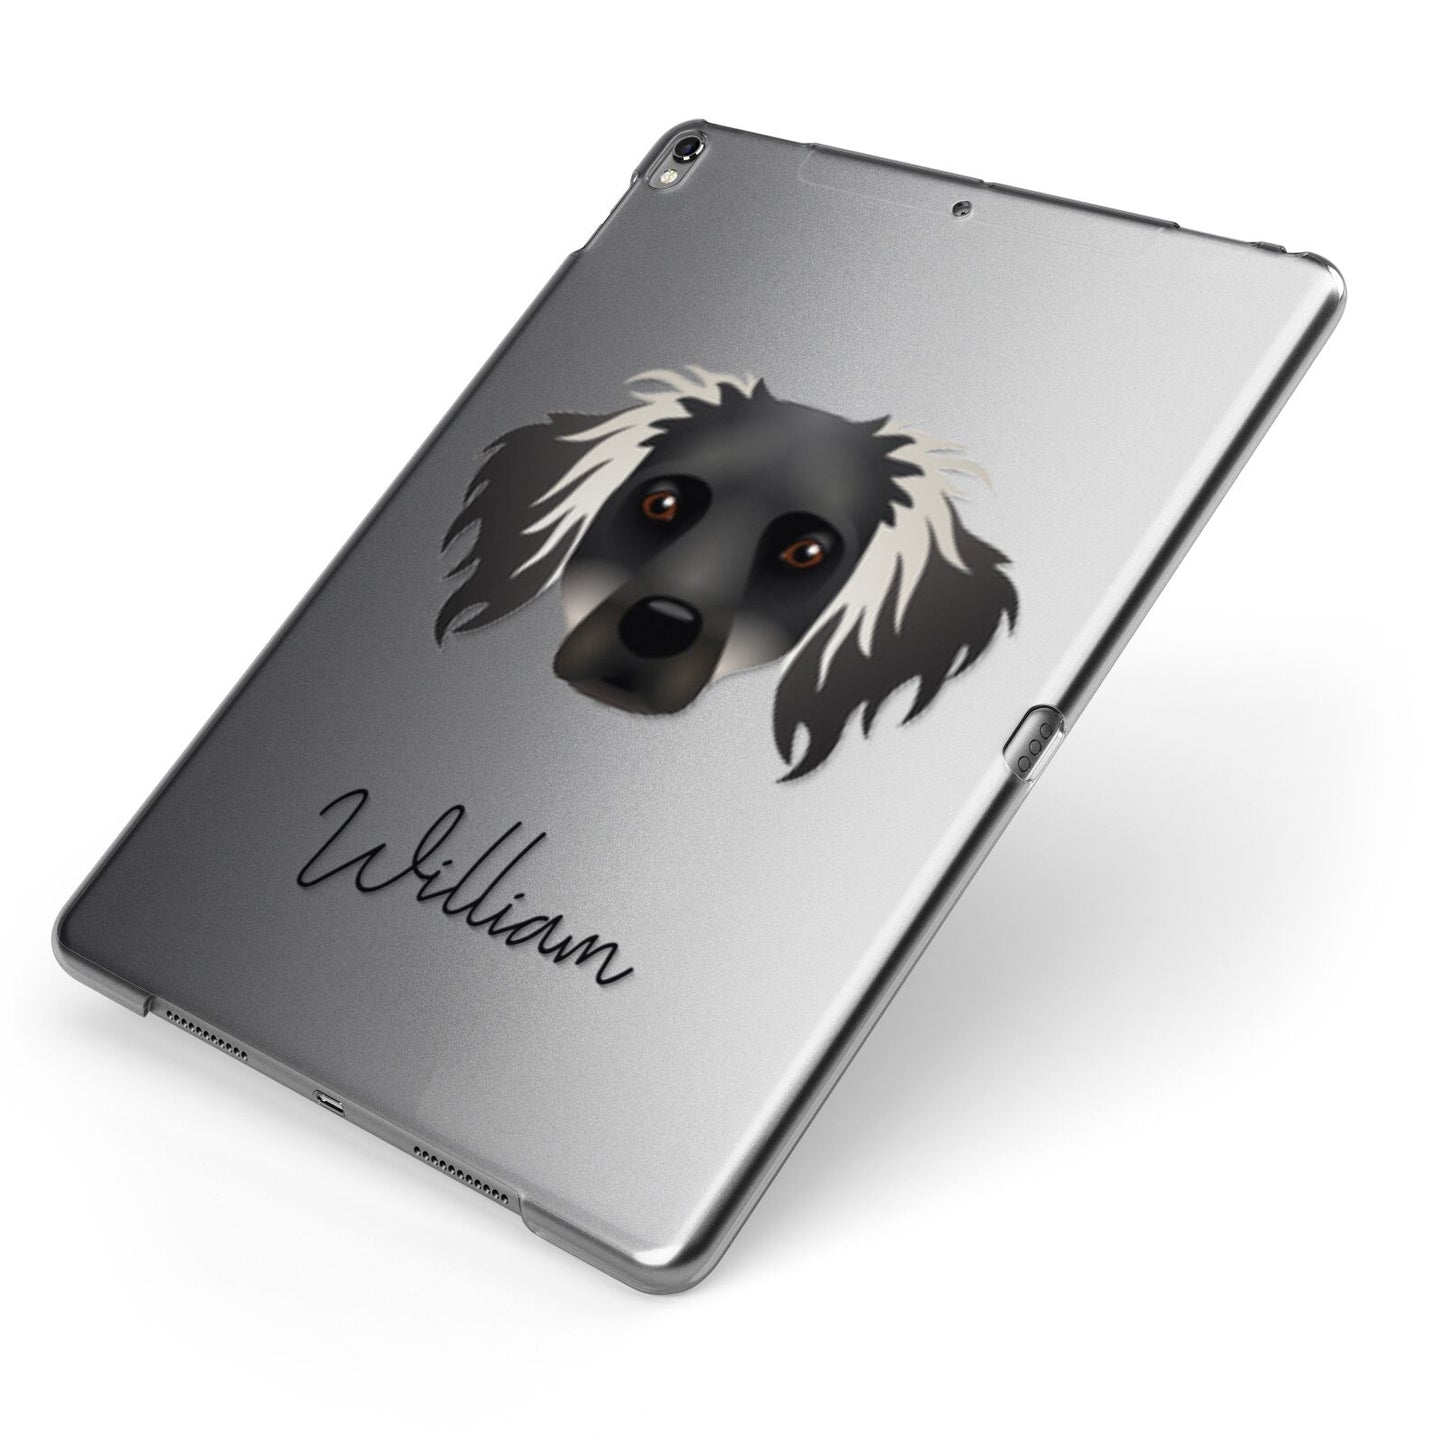 Dameranian Personalised Apple iPad Case on Grey iPad Side View